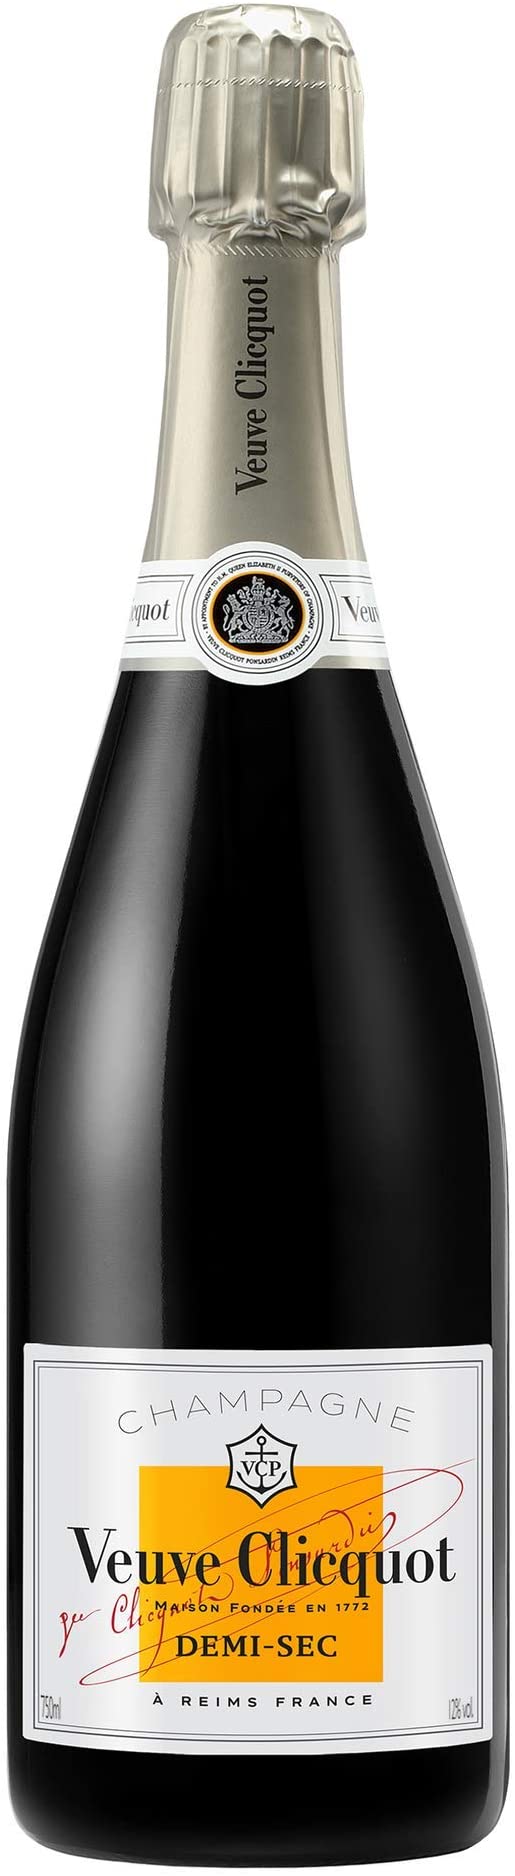 Veuve Clicquot Demi-Sec Champagne NV